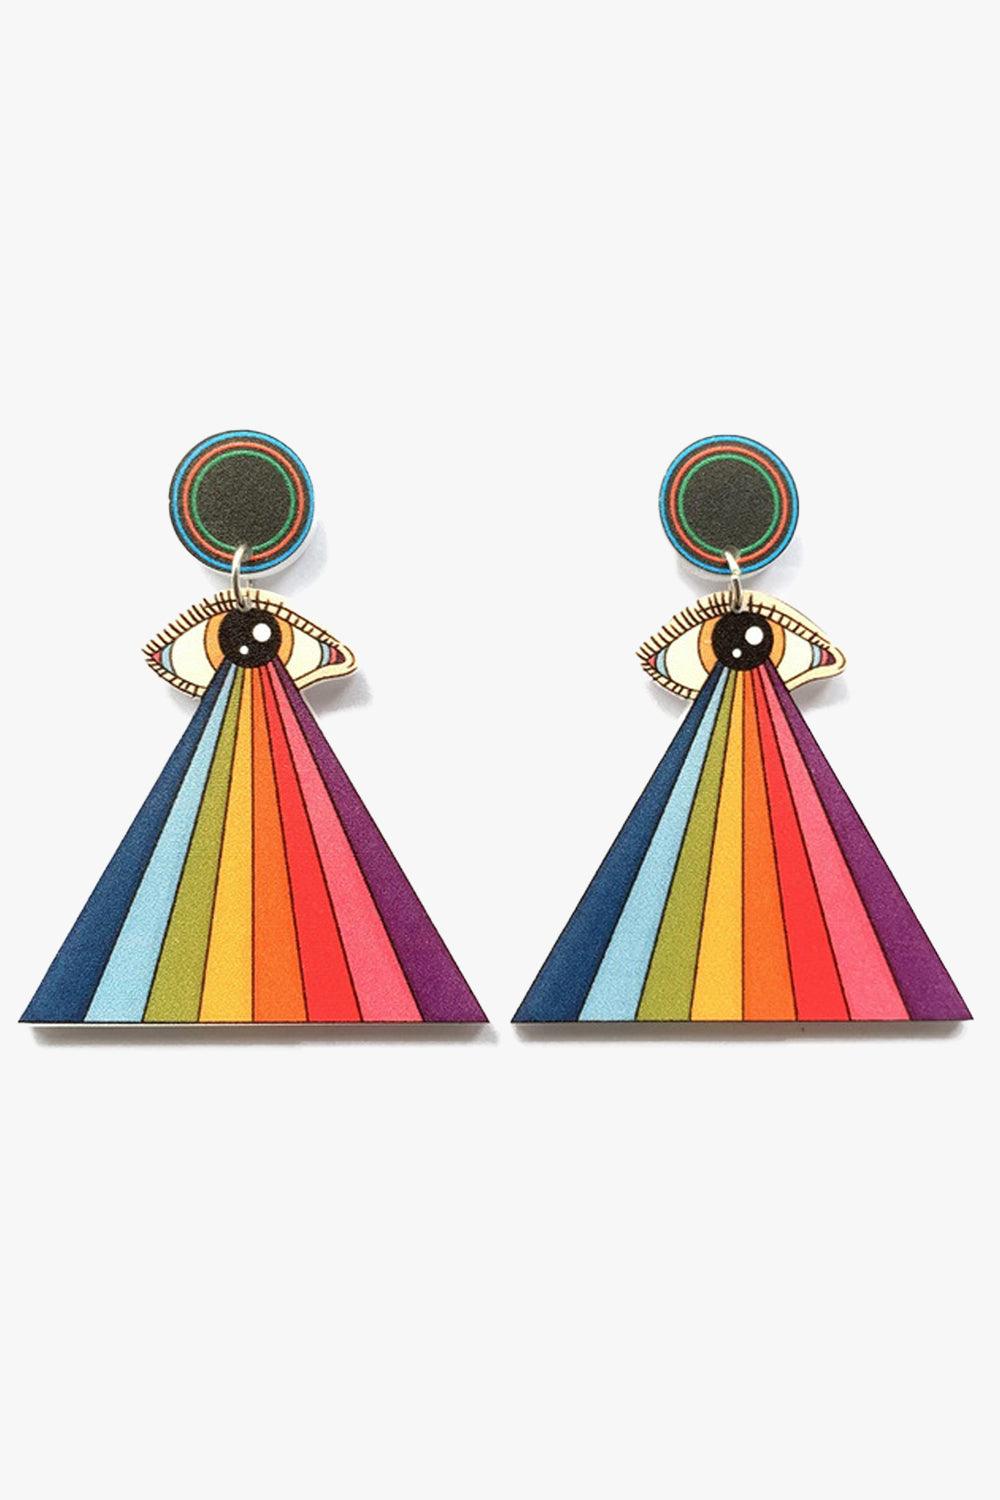 Infinite Eye Rainbow Prism Earrings - Aesthetic Clothes Shop